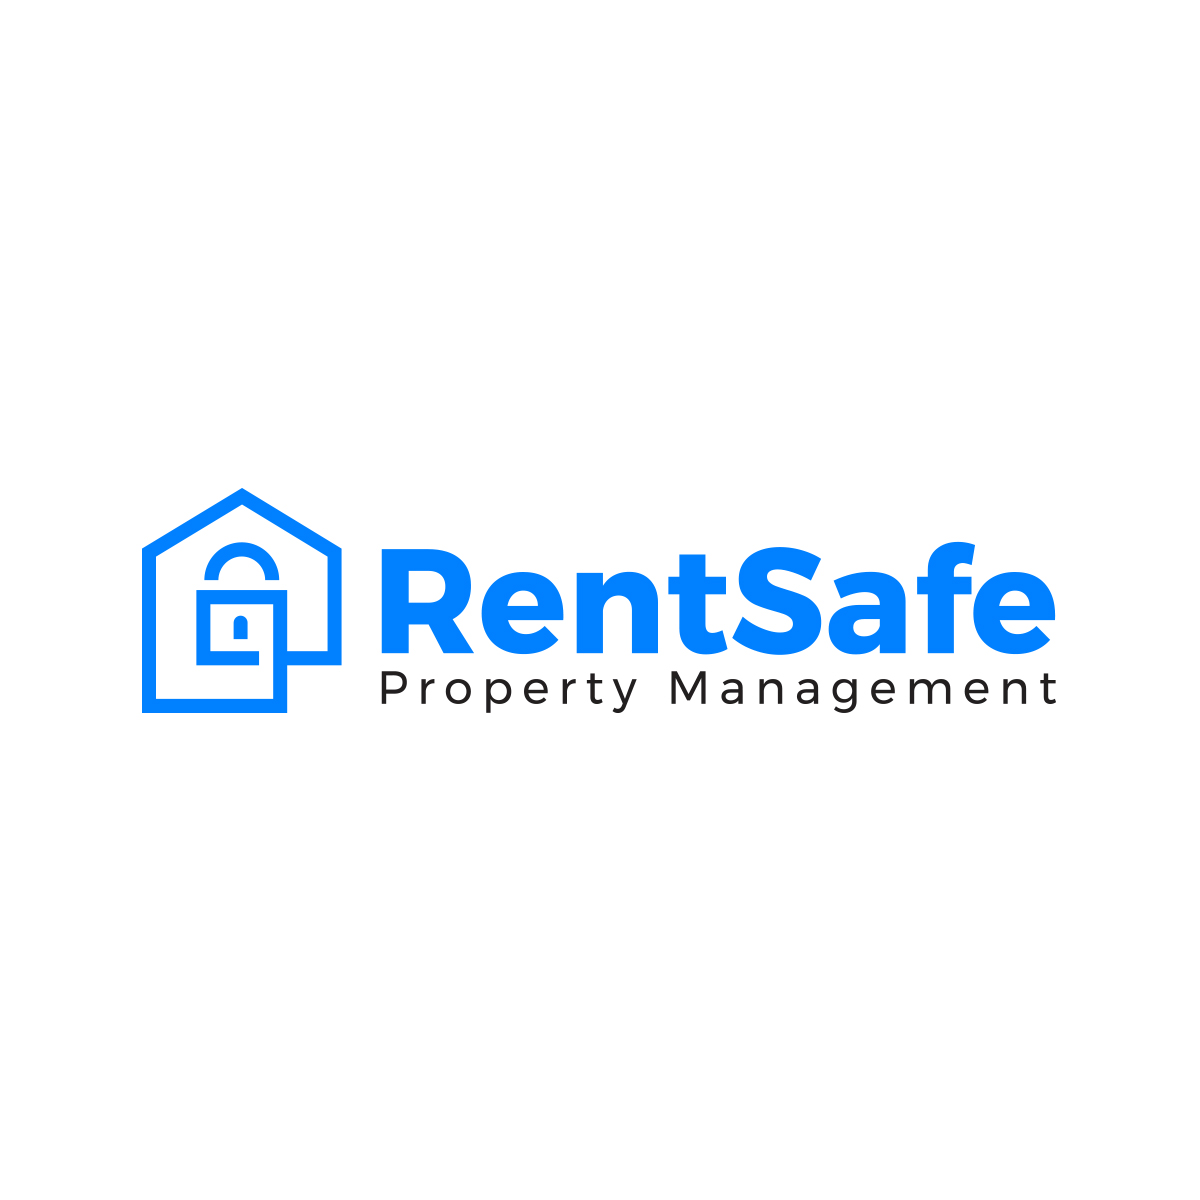 RentSafe Property Management